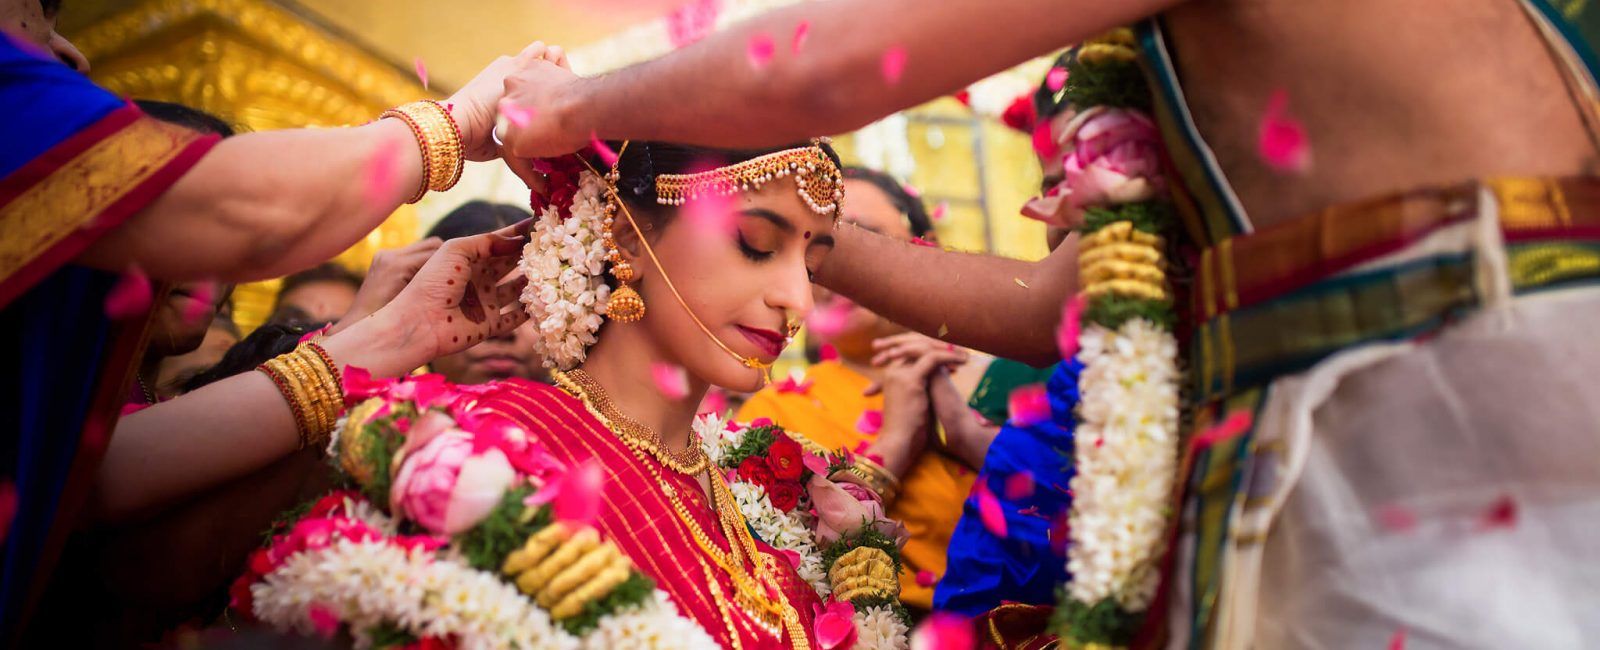 Creative Tamil Wedding Photography Poses. wedding photography poses